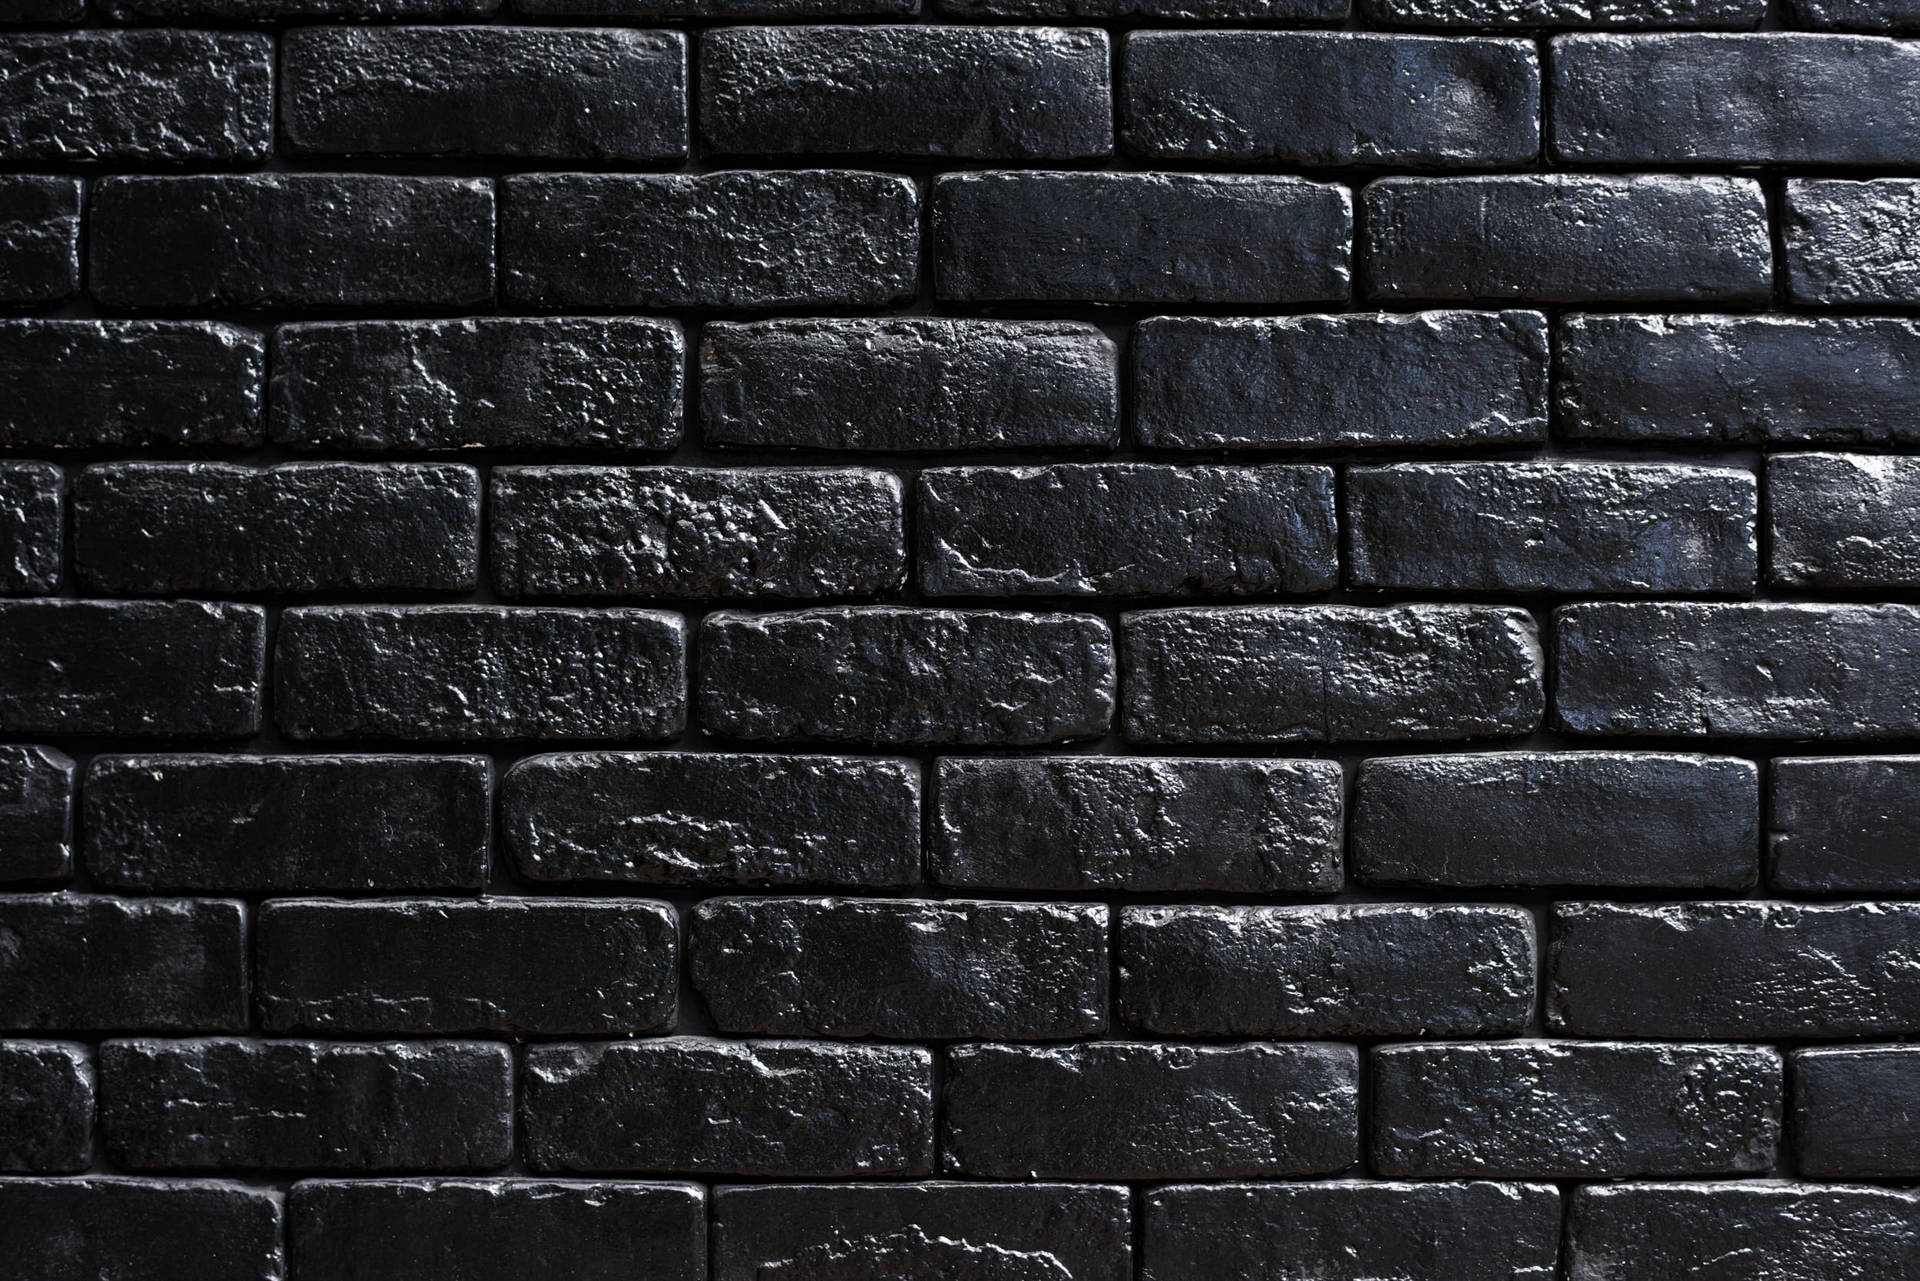 Top 999+ Dark Wall Wallpaper Full HD, 4K Free to Use